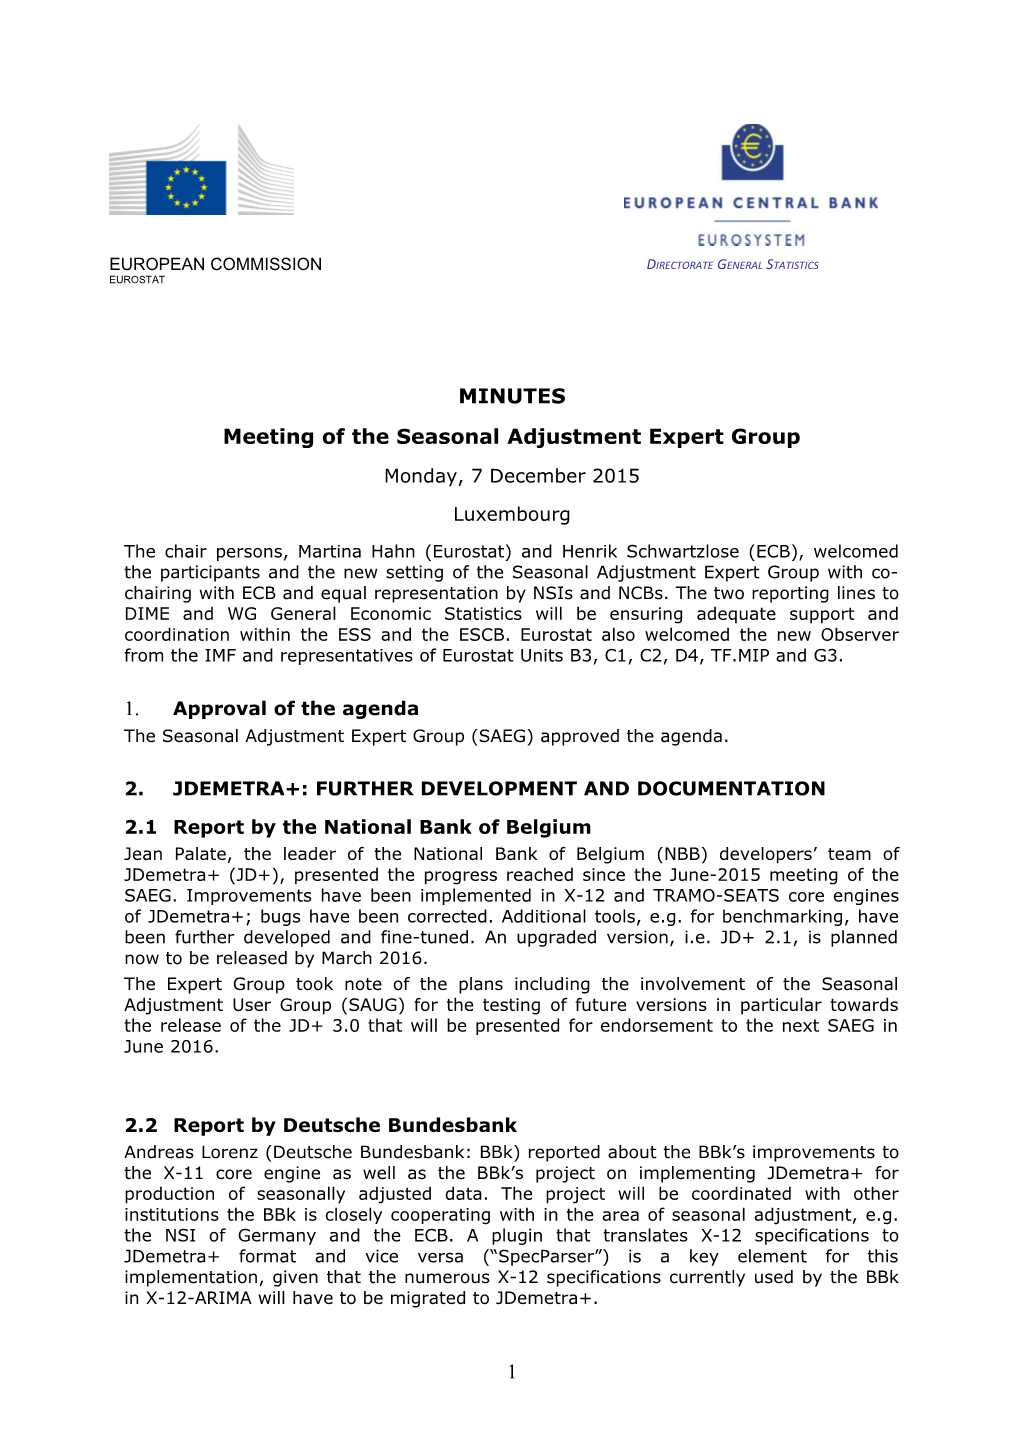 Meeting of the Seasonal Adjustment Expert Group